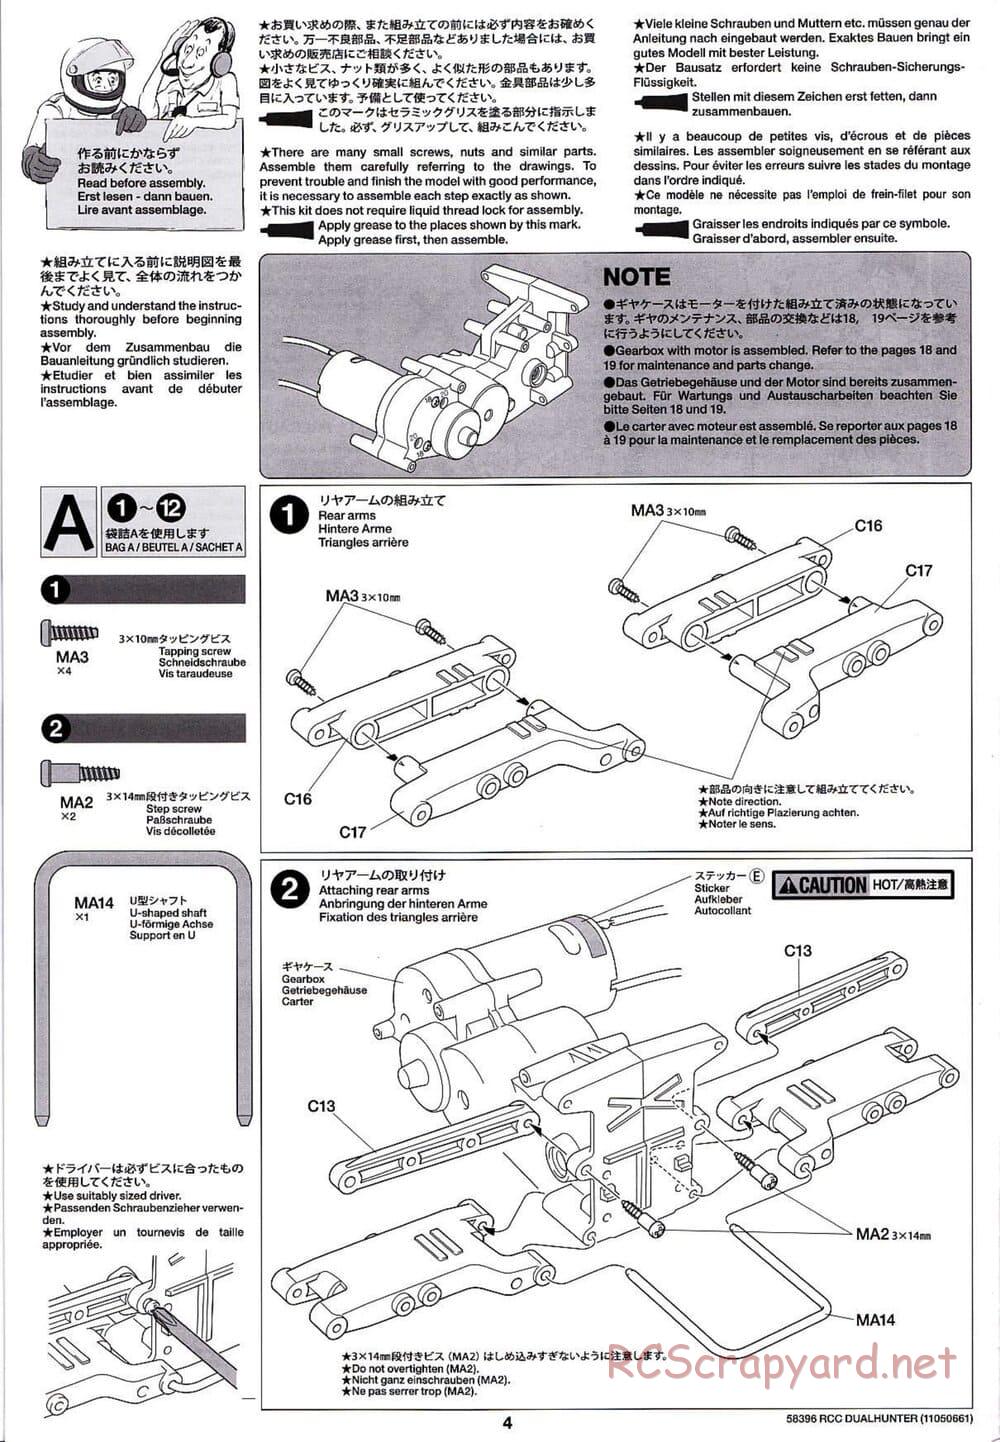 Tamiya - Dualhunter - WR-01 Chassis - Manual - Page 4